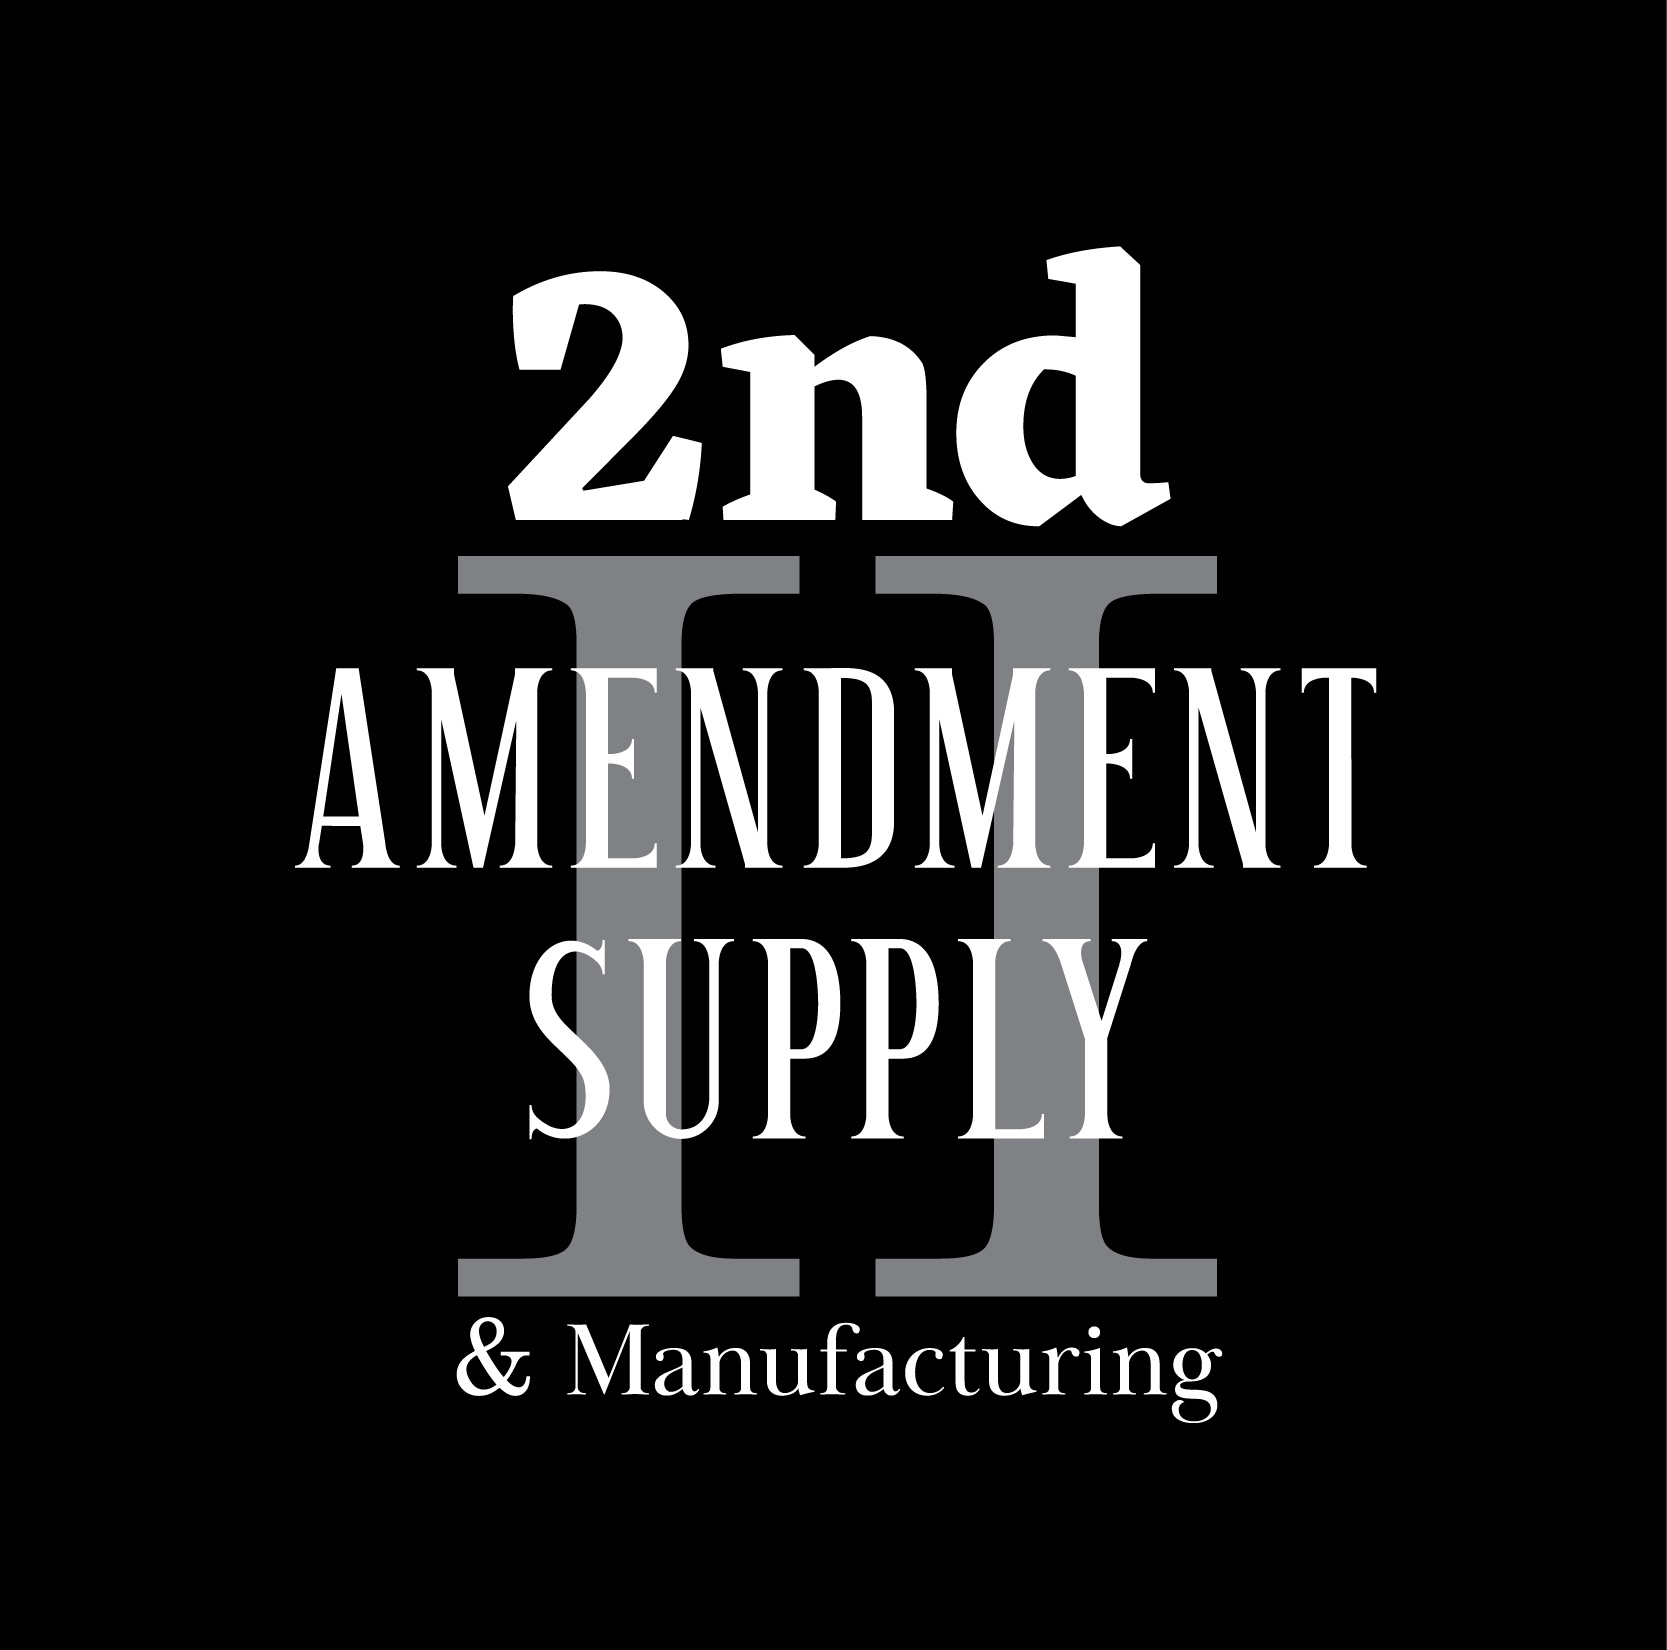 2nd Amendment Supply & Manufacturing logo